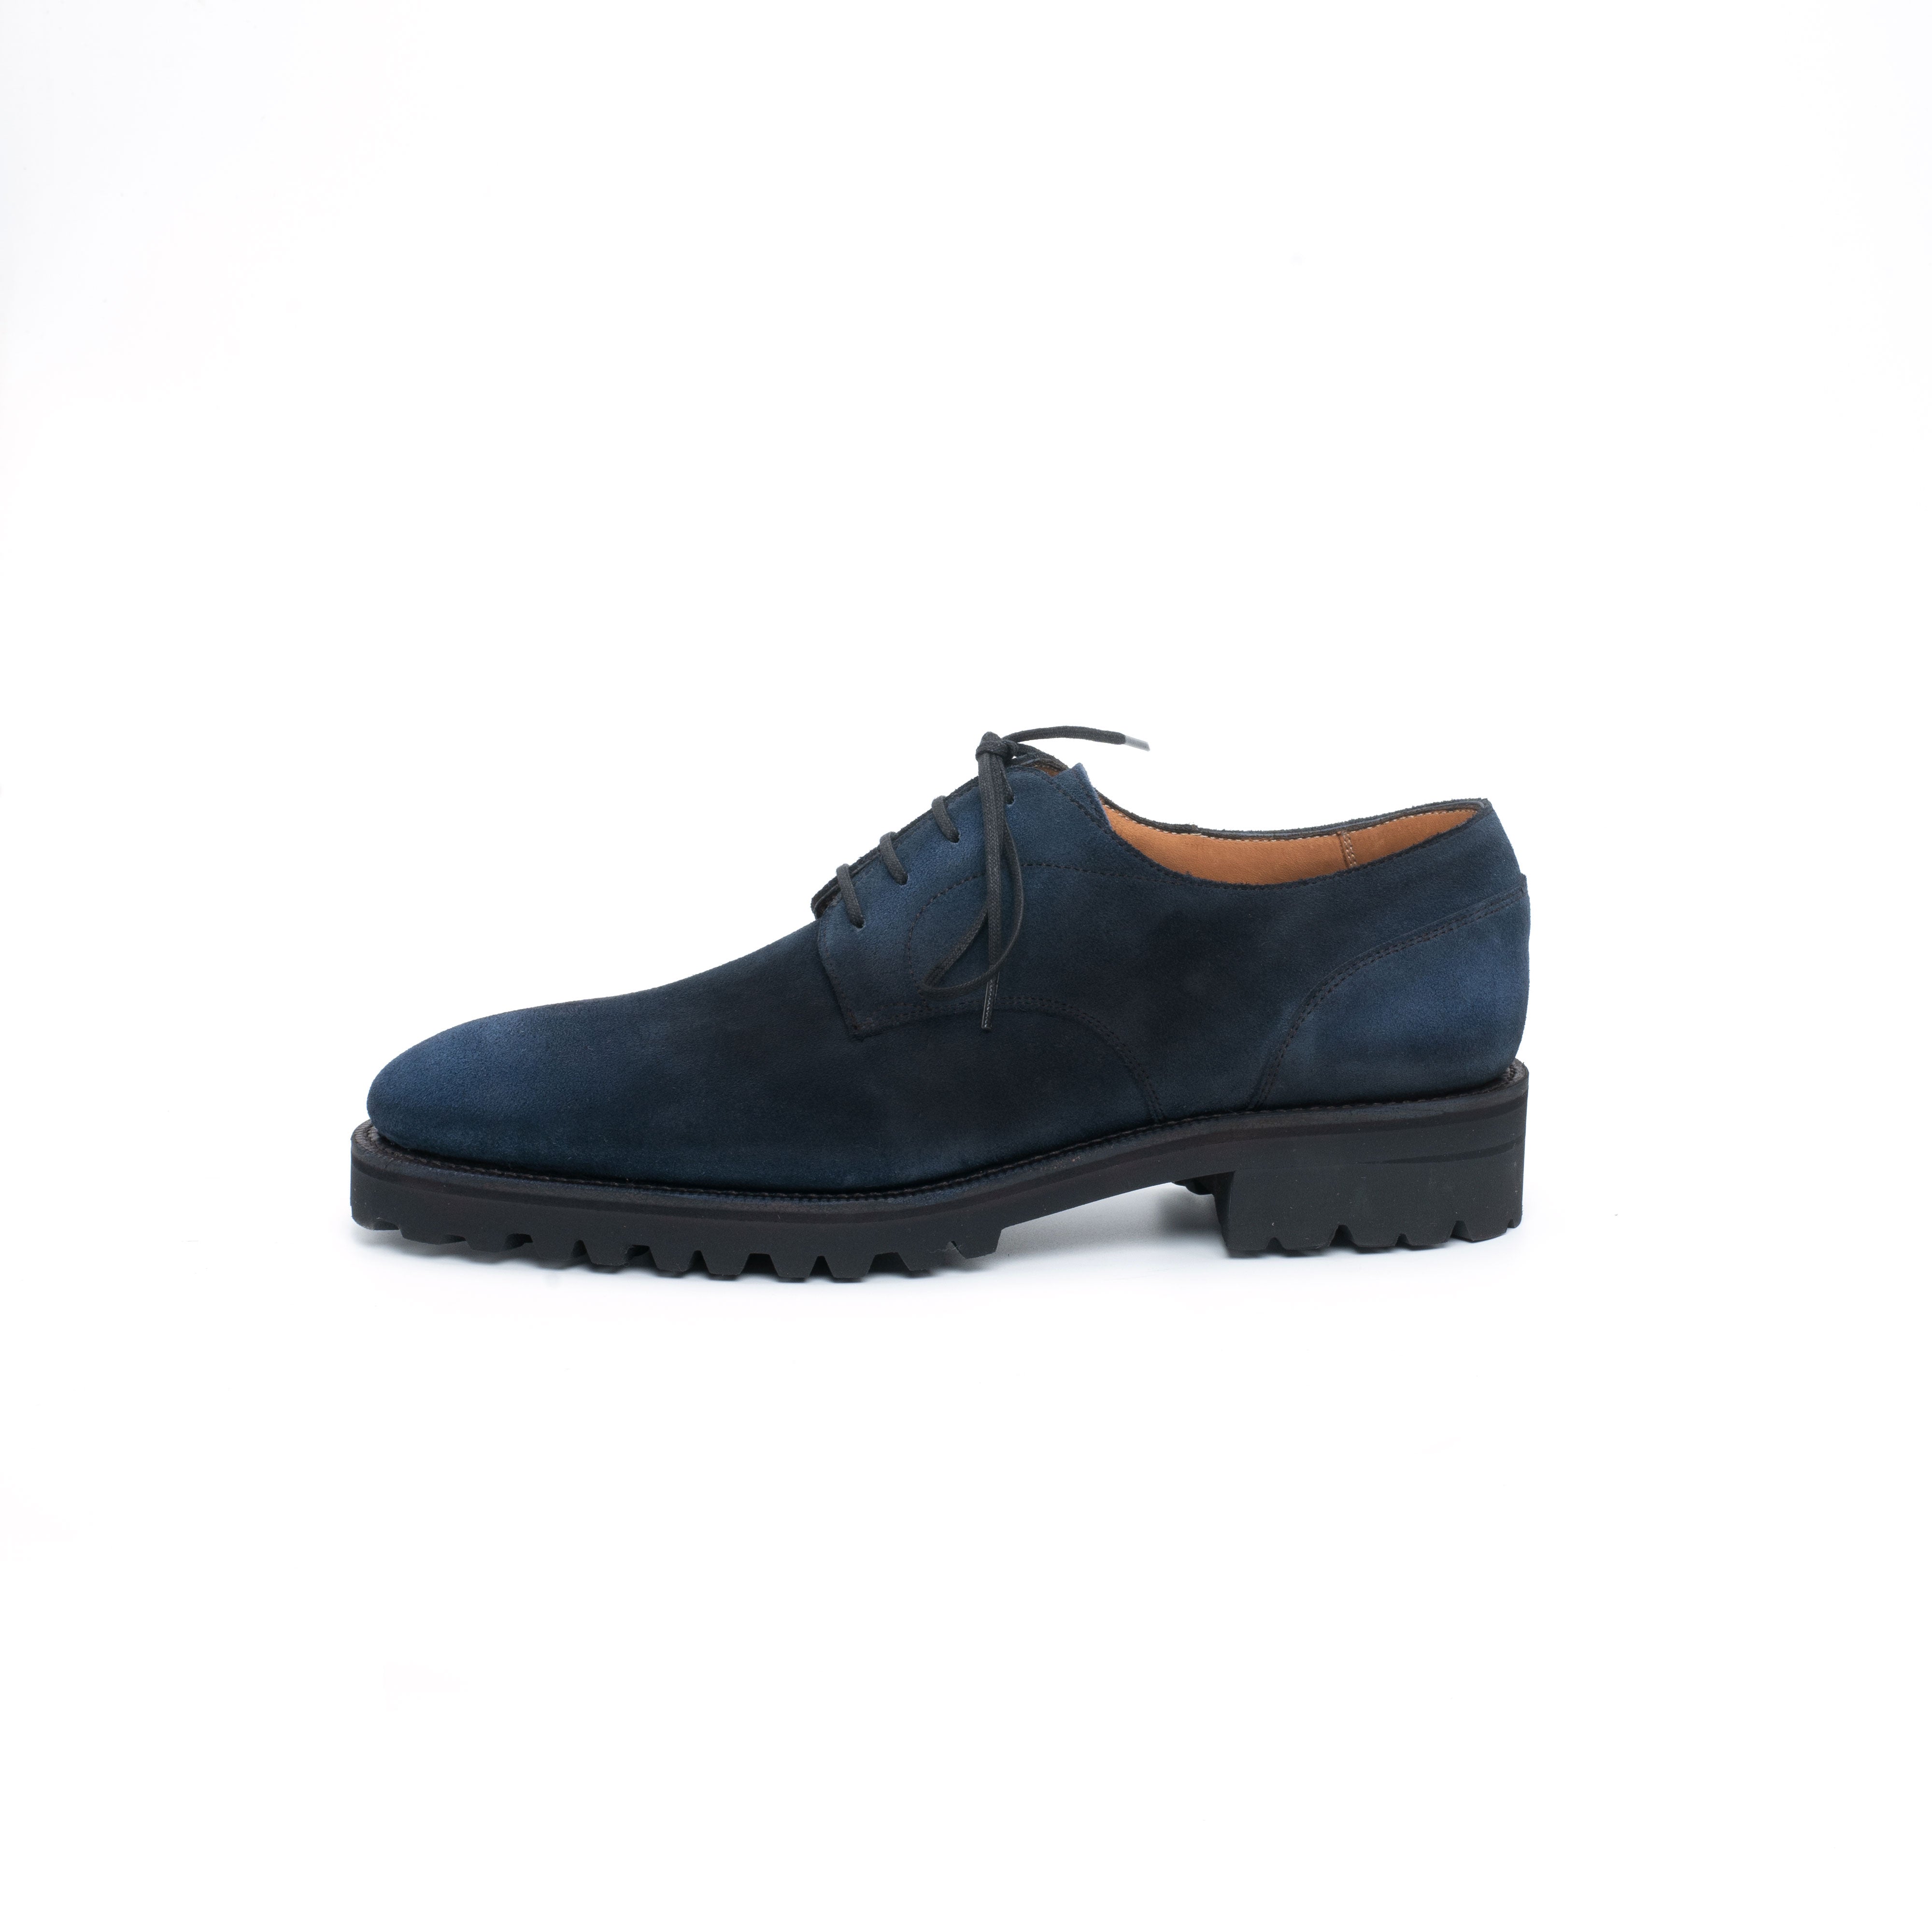 Simple Derby Shoe by Norman Vilalta Men’s Goodyear-welted derby shoes in Barcelona, Spain